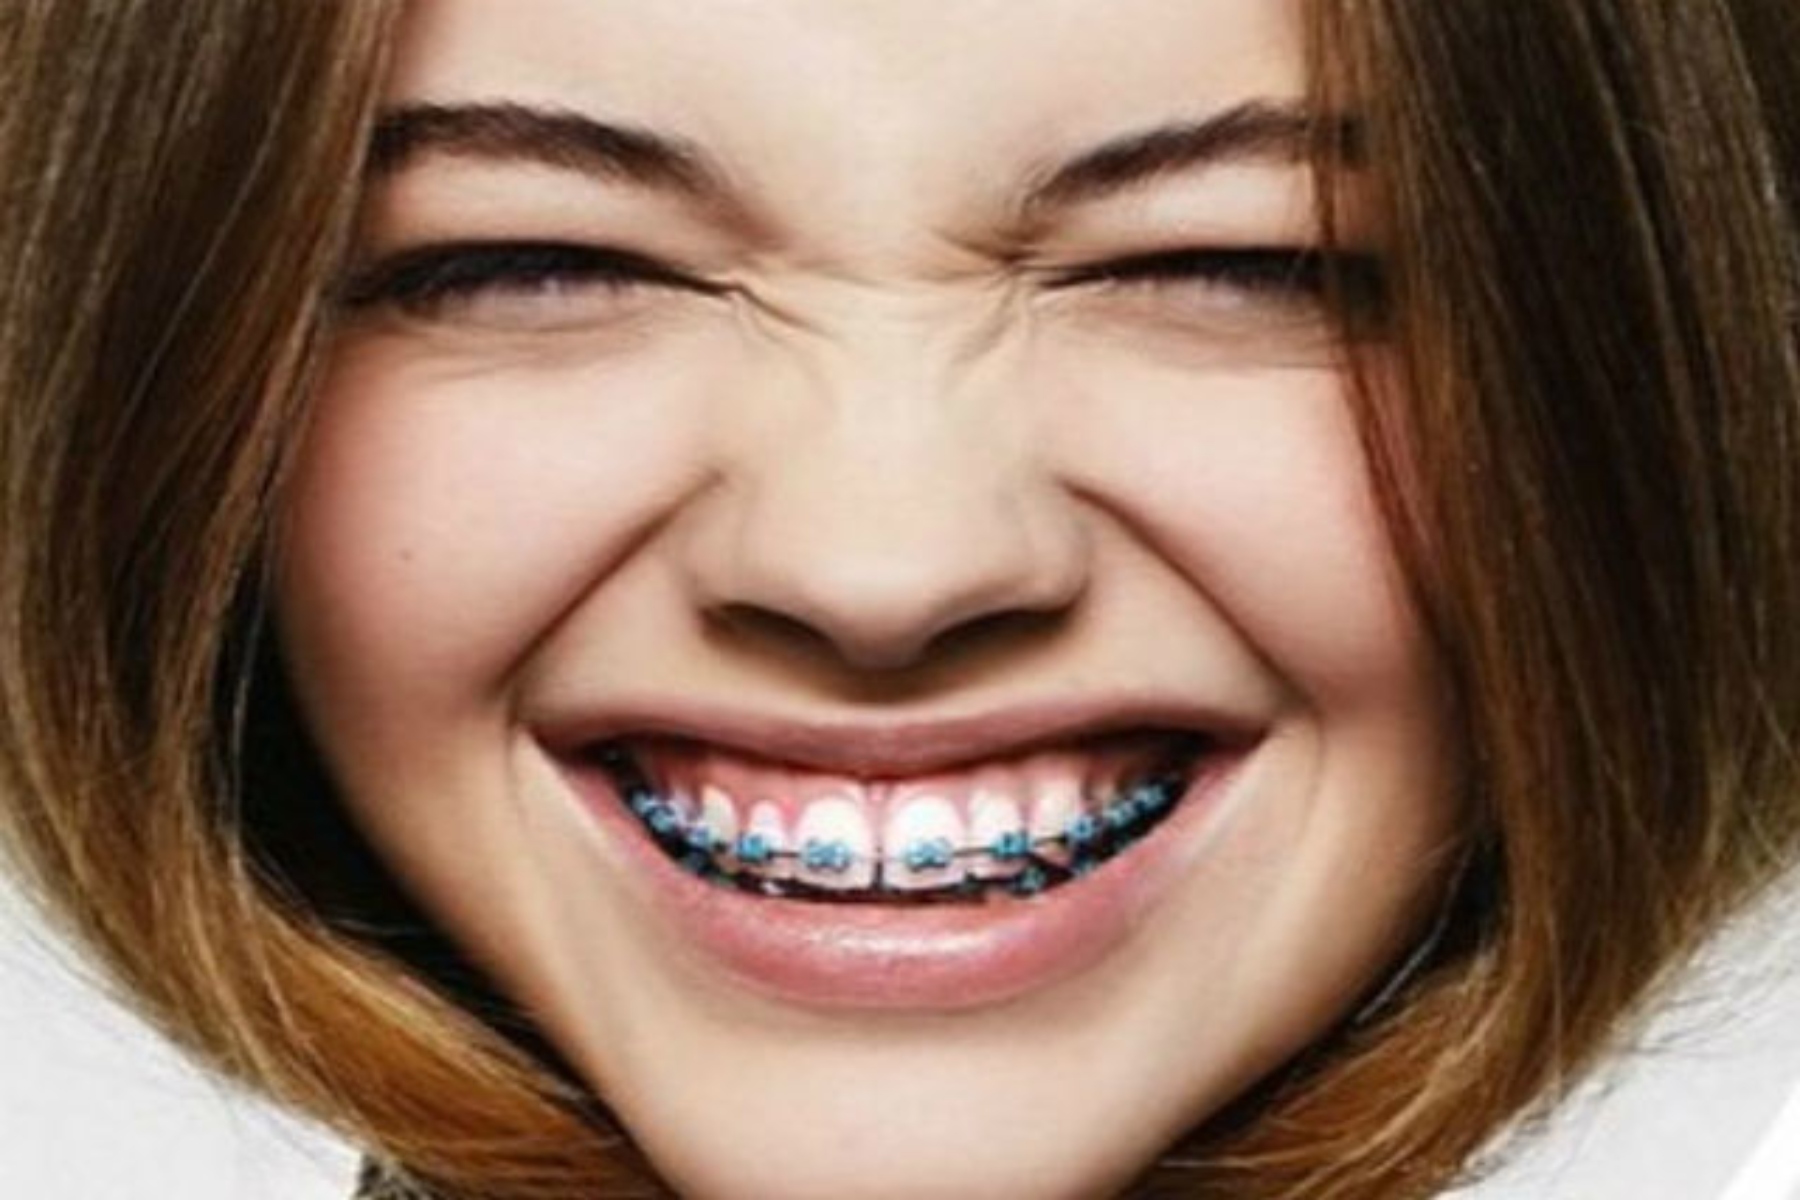 Dental beauty: Επτά συμβουλές μακιγιάζ με οδοντικά σιδεράκια